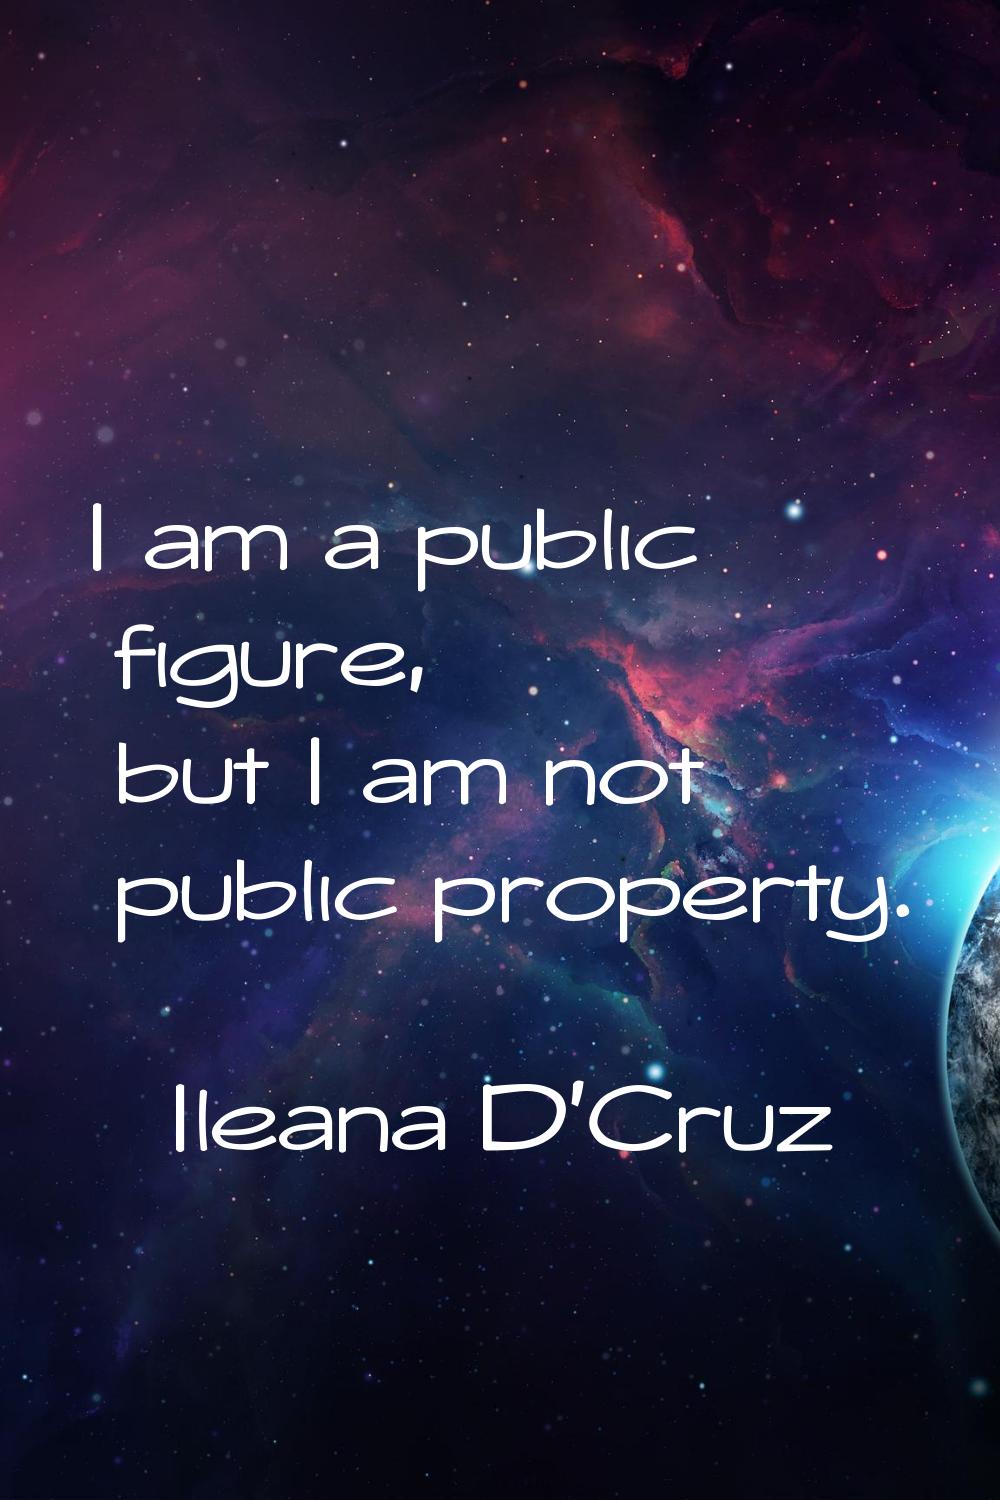 I am a public figure, but I am not public property.